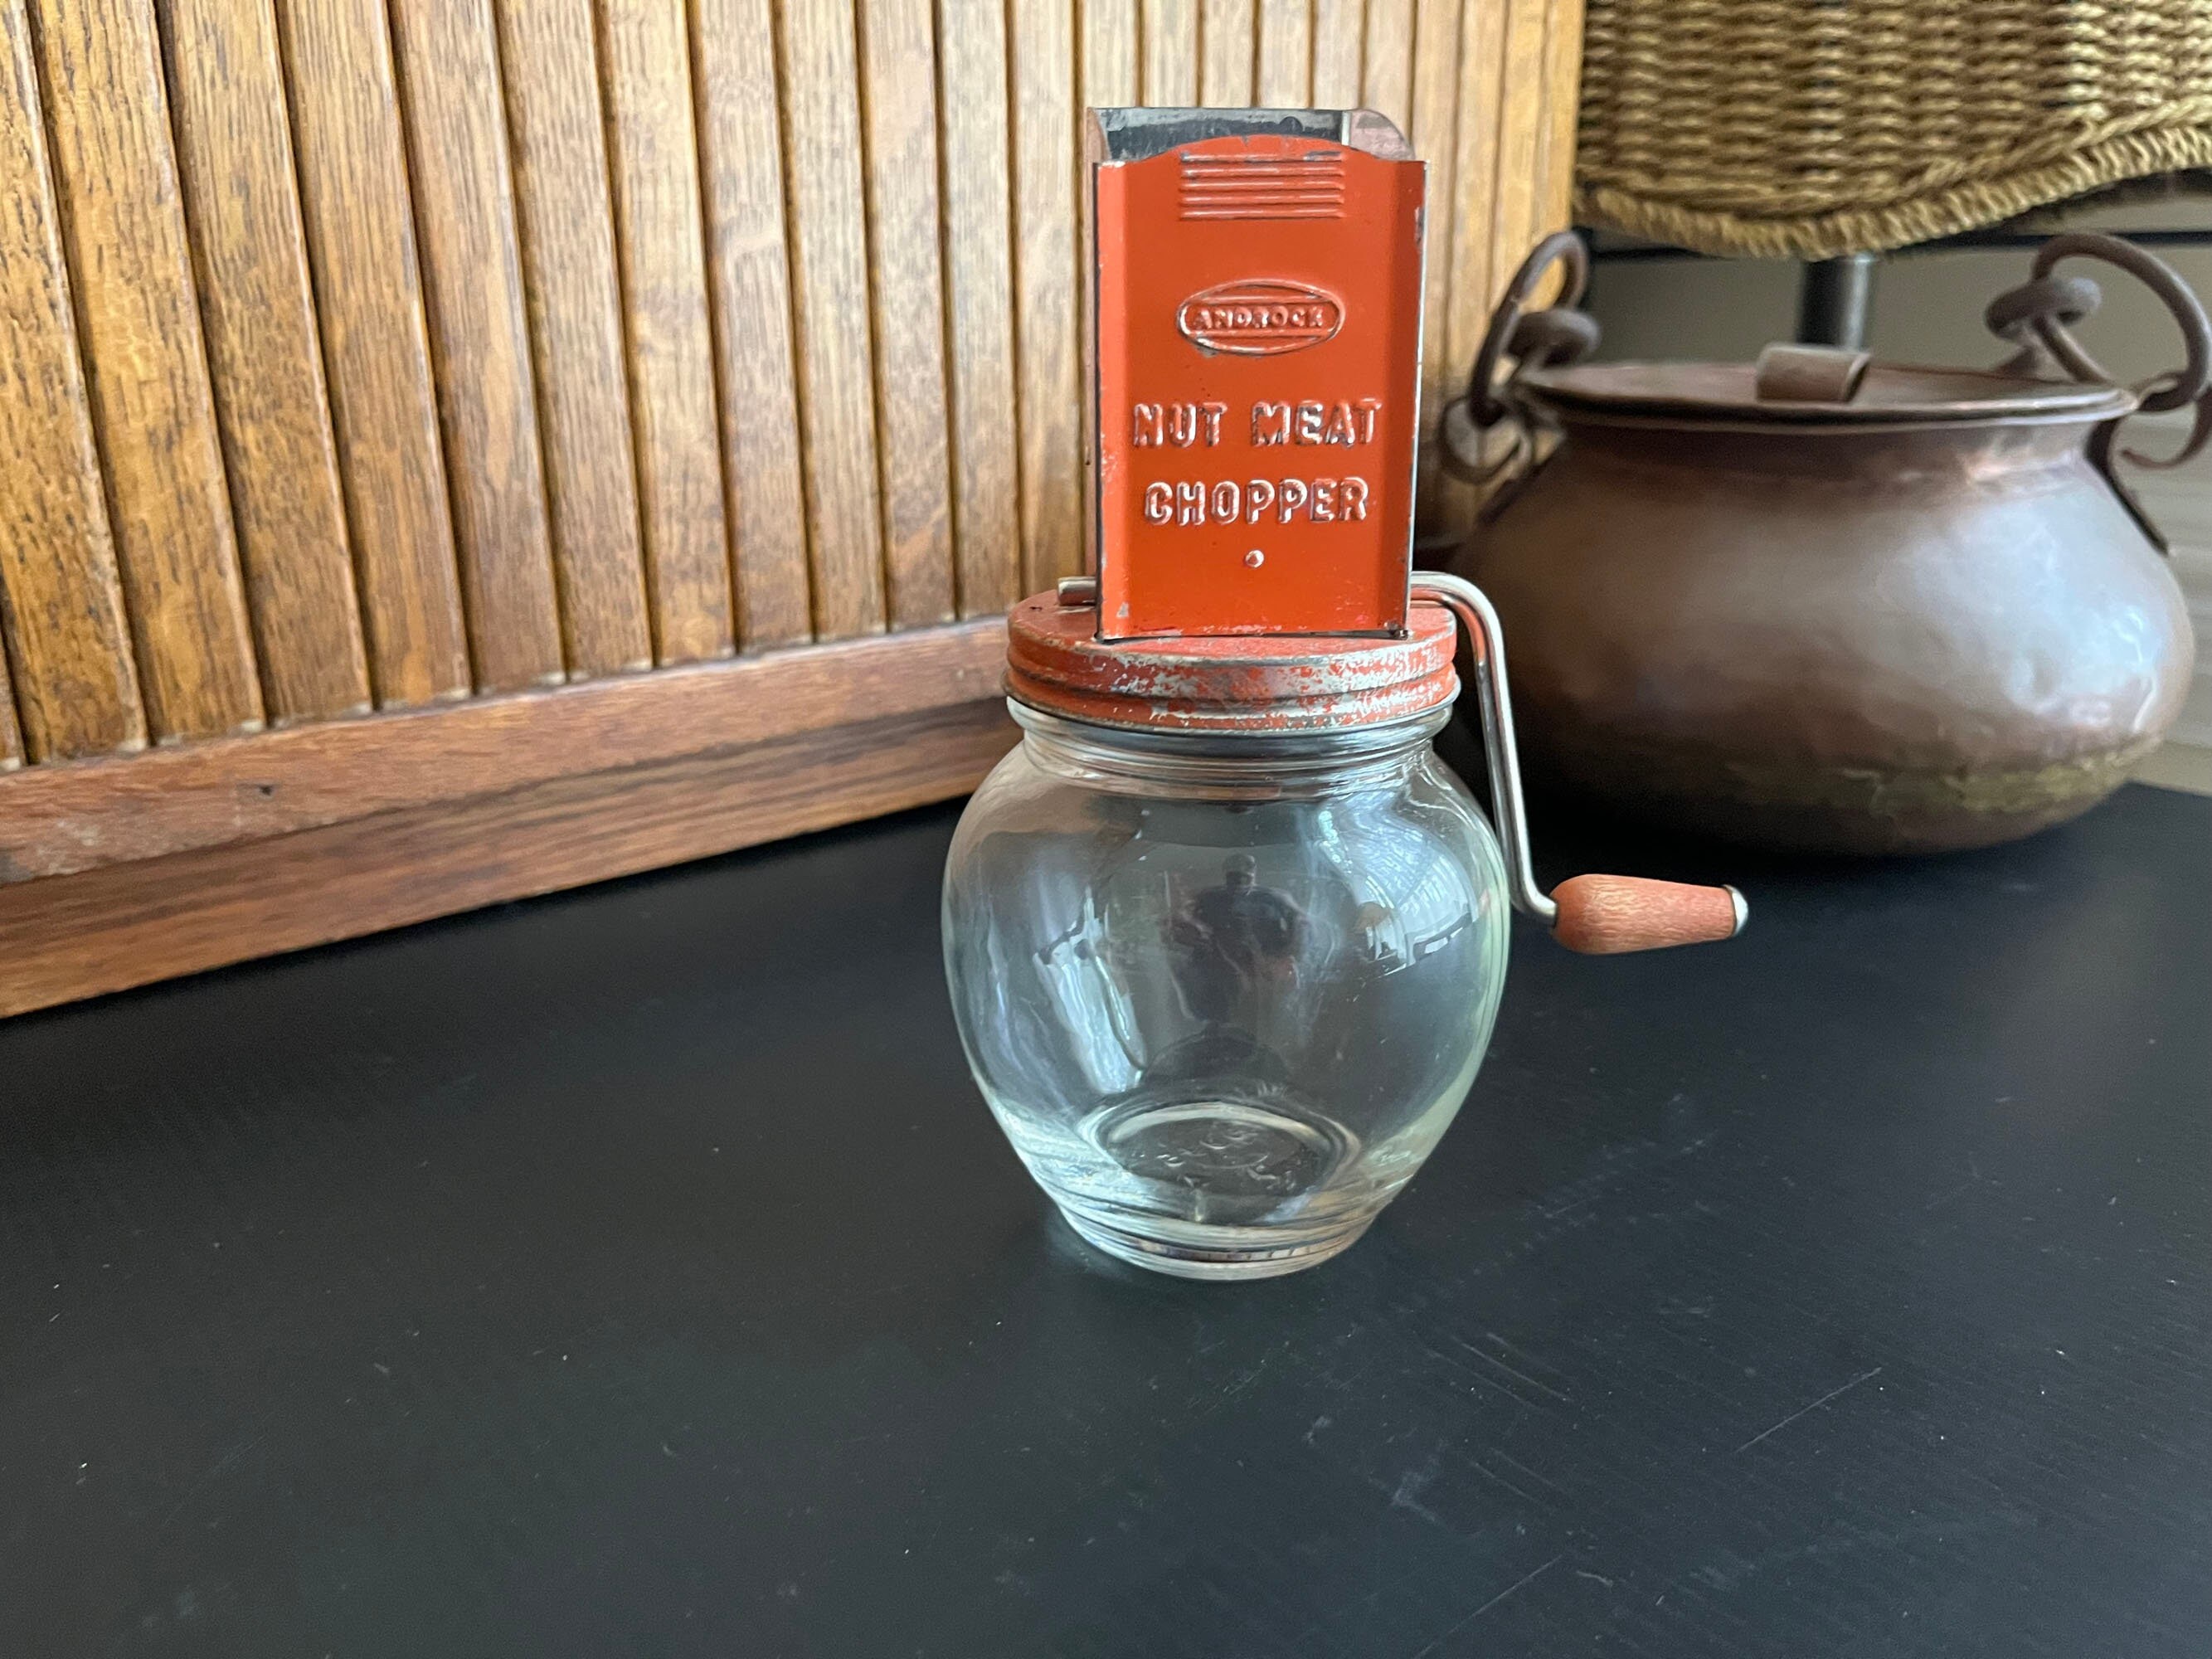 vintage kitchenware, hand-crank nut grinder chopper w/ glass shaker jar